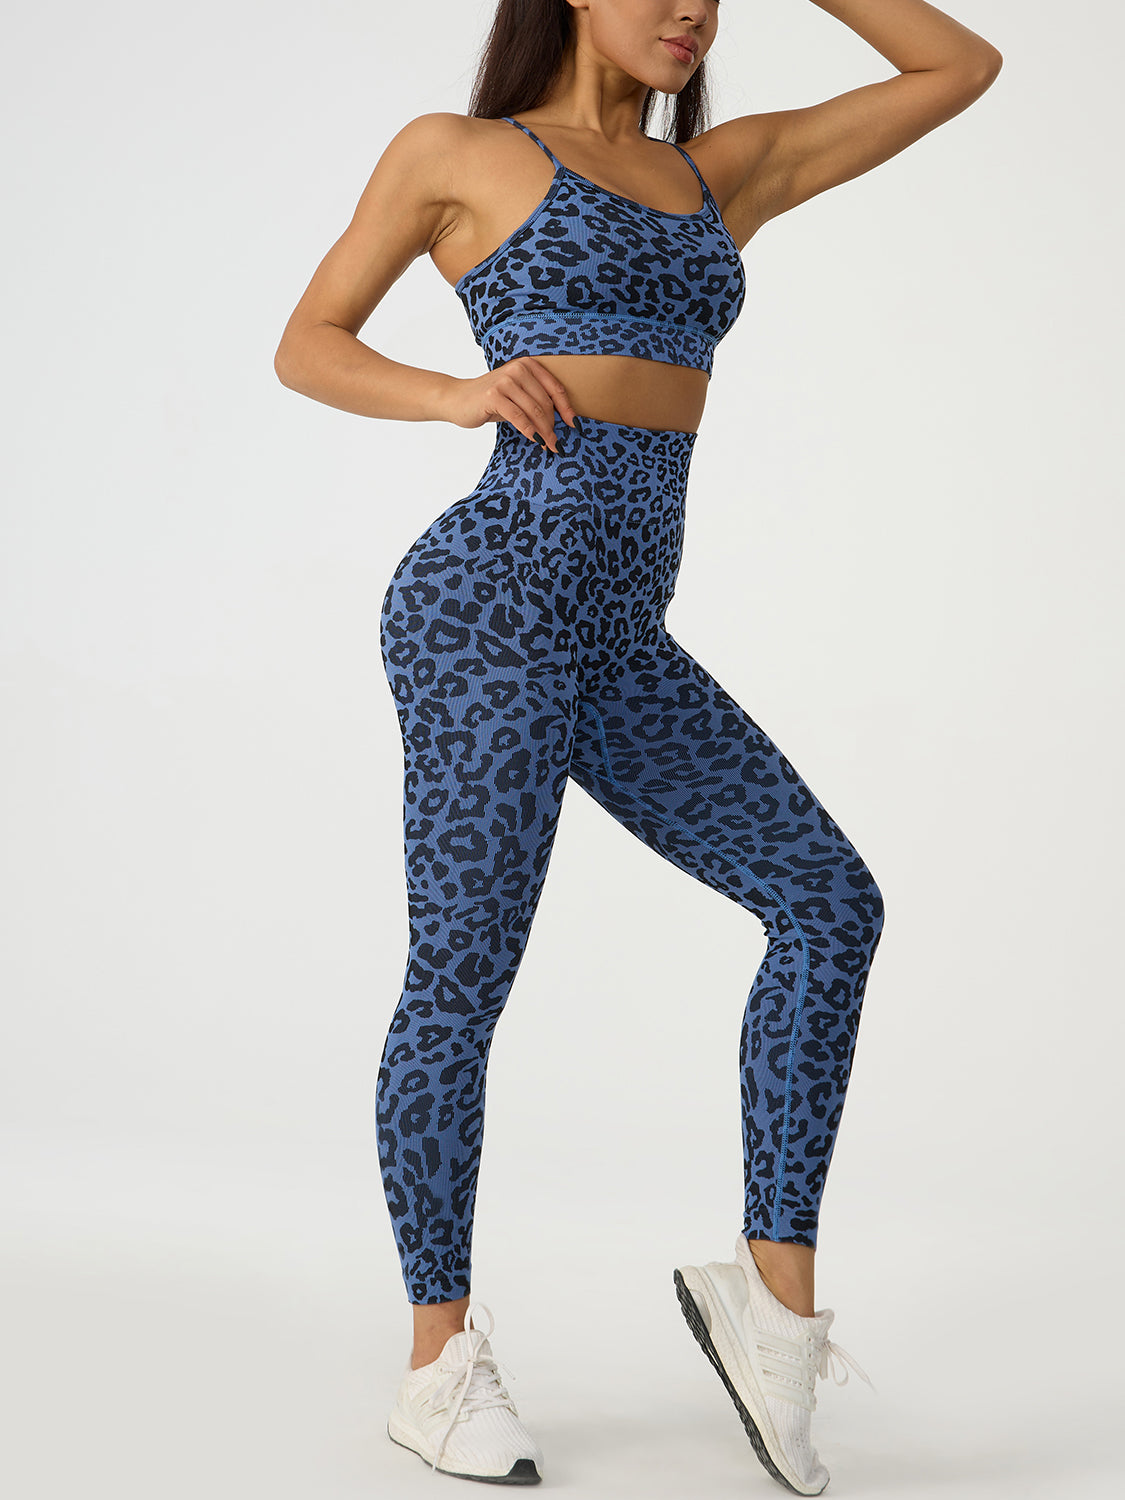 Leopard Crisscross Top and Leggings Active Set apparel & accessories